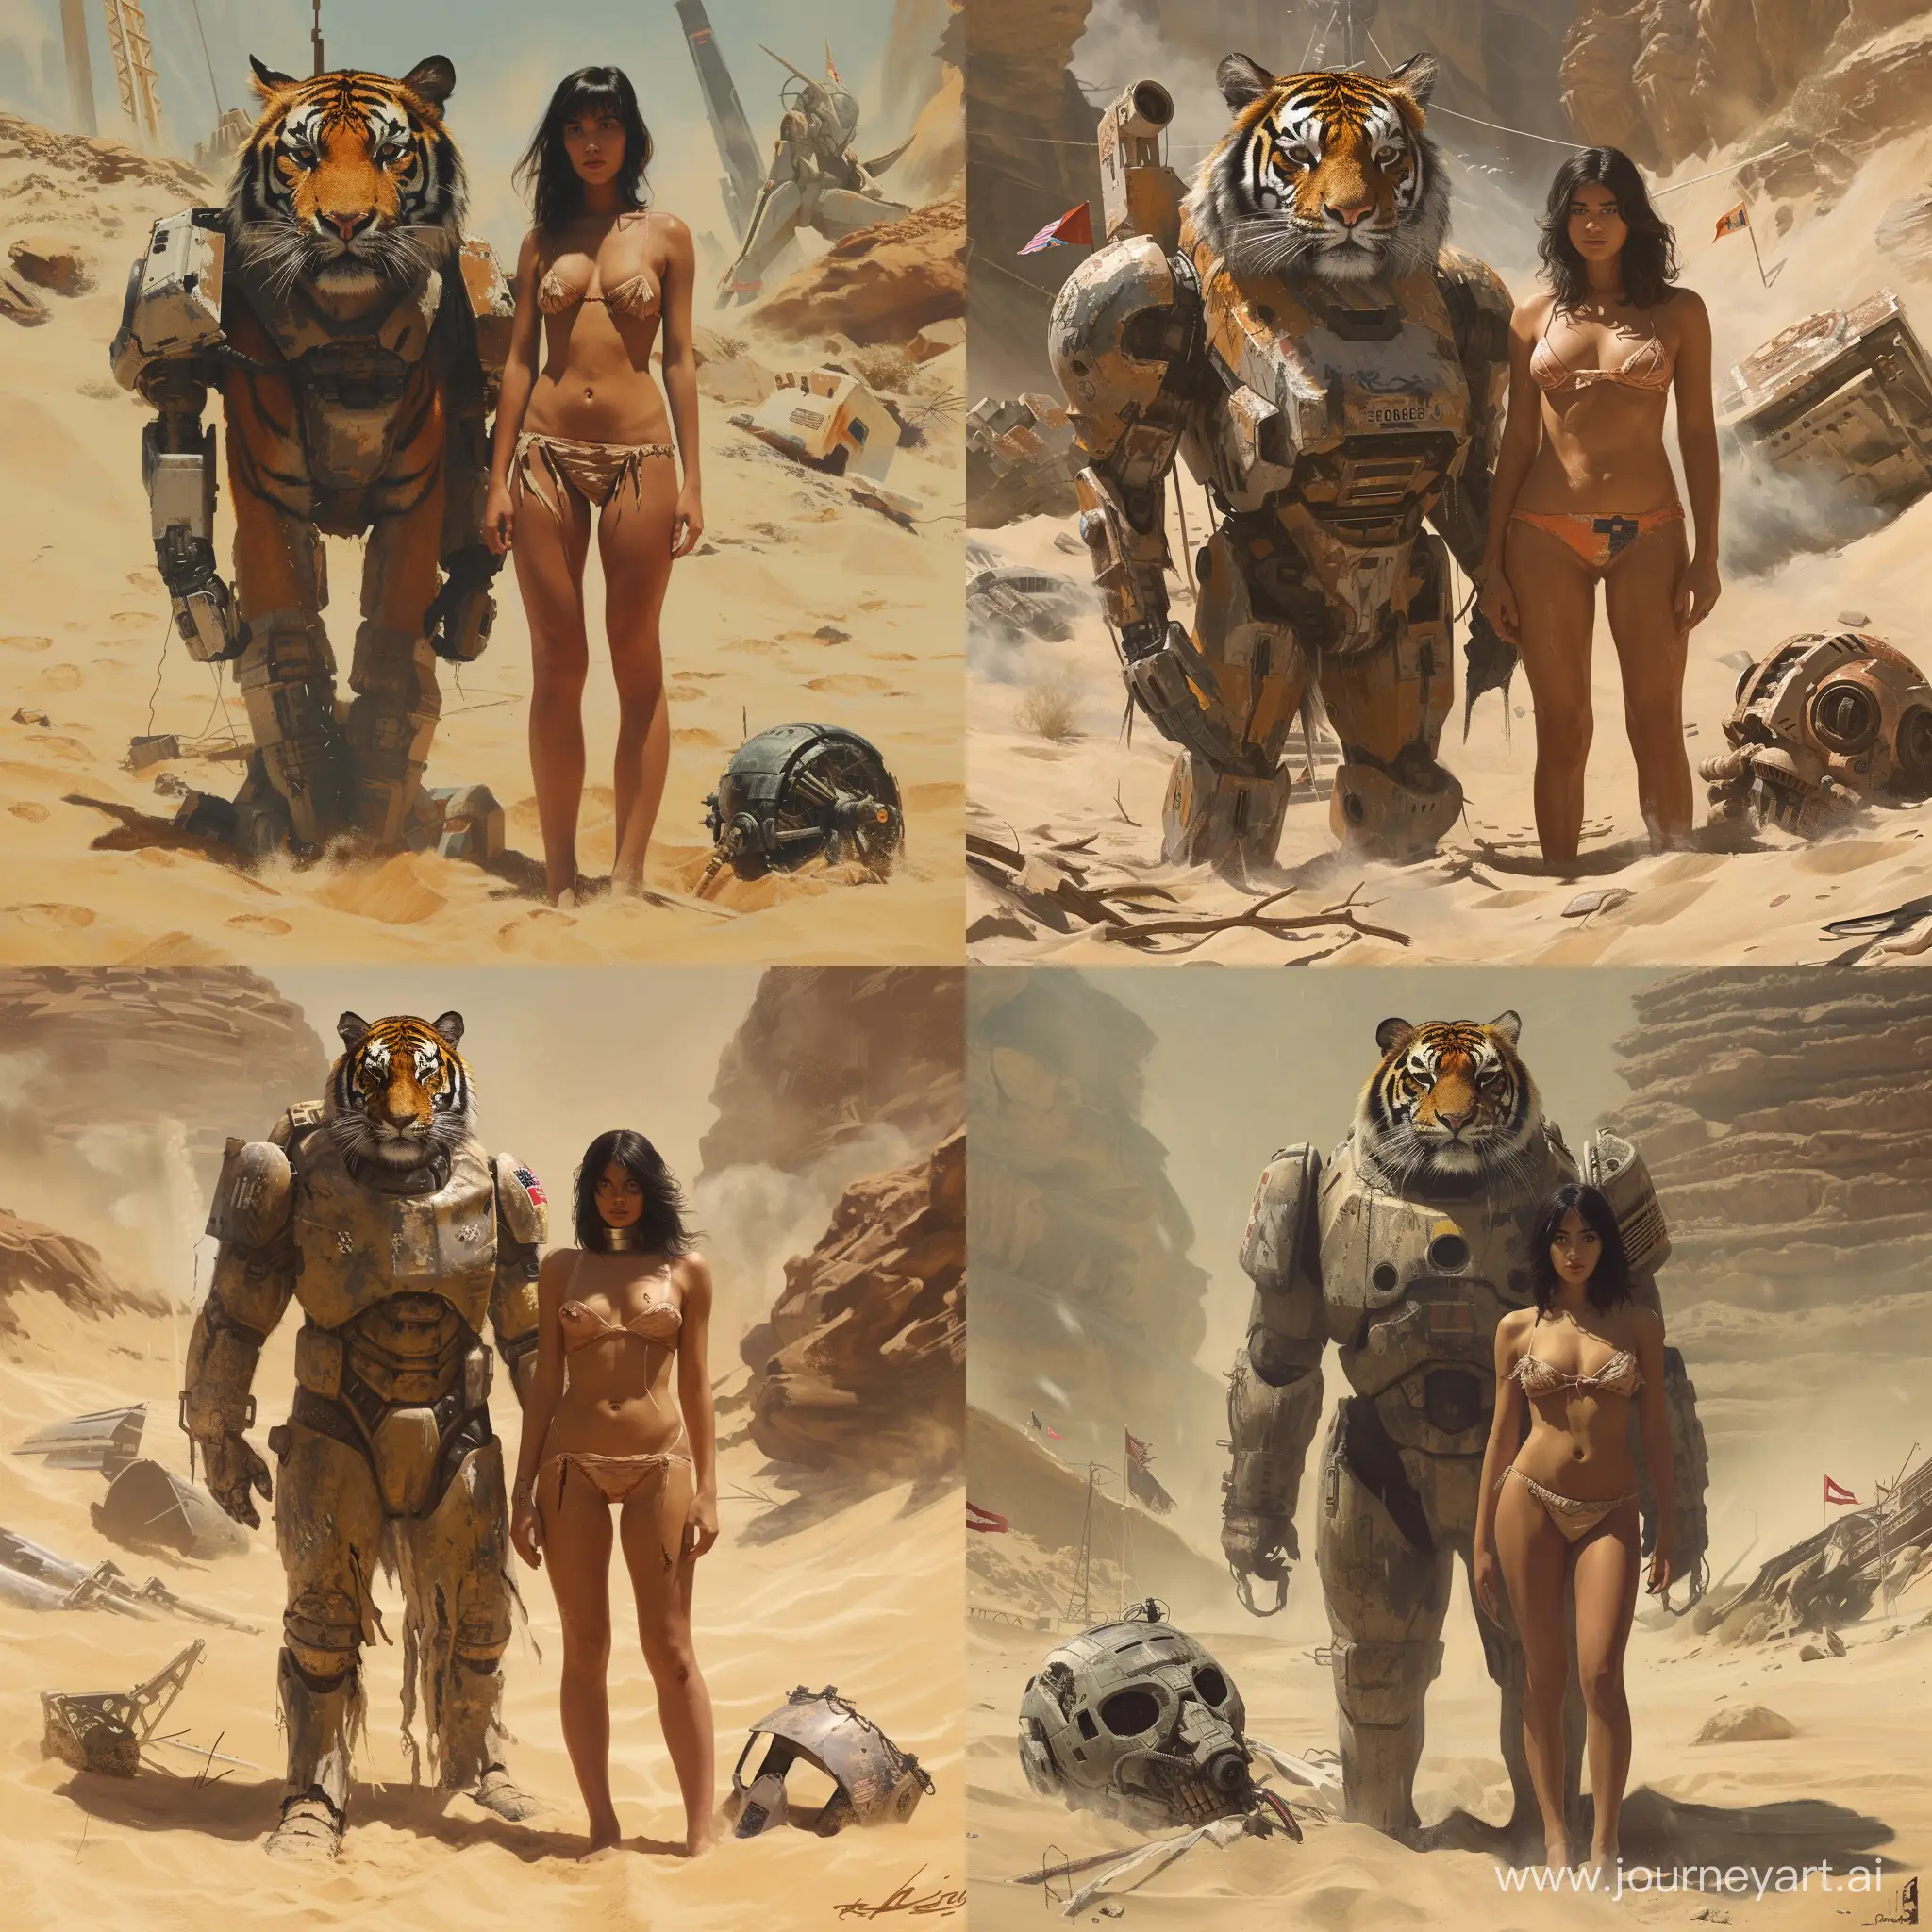 Futuristic-Tiger-and-Survivor-Amidst-PostApocalyptic-Ruins